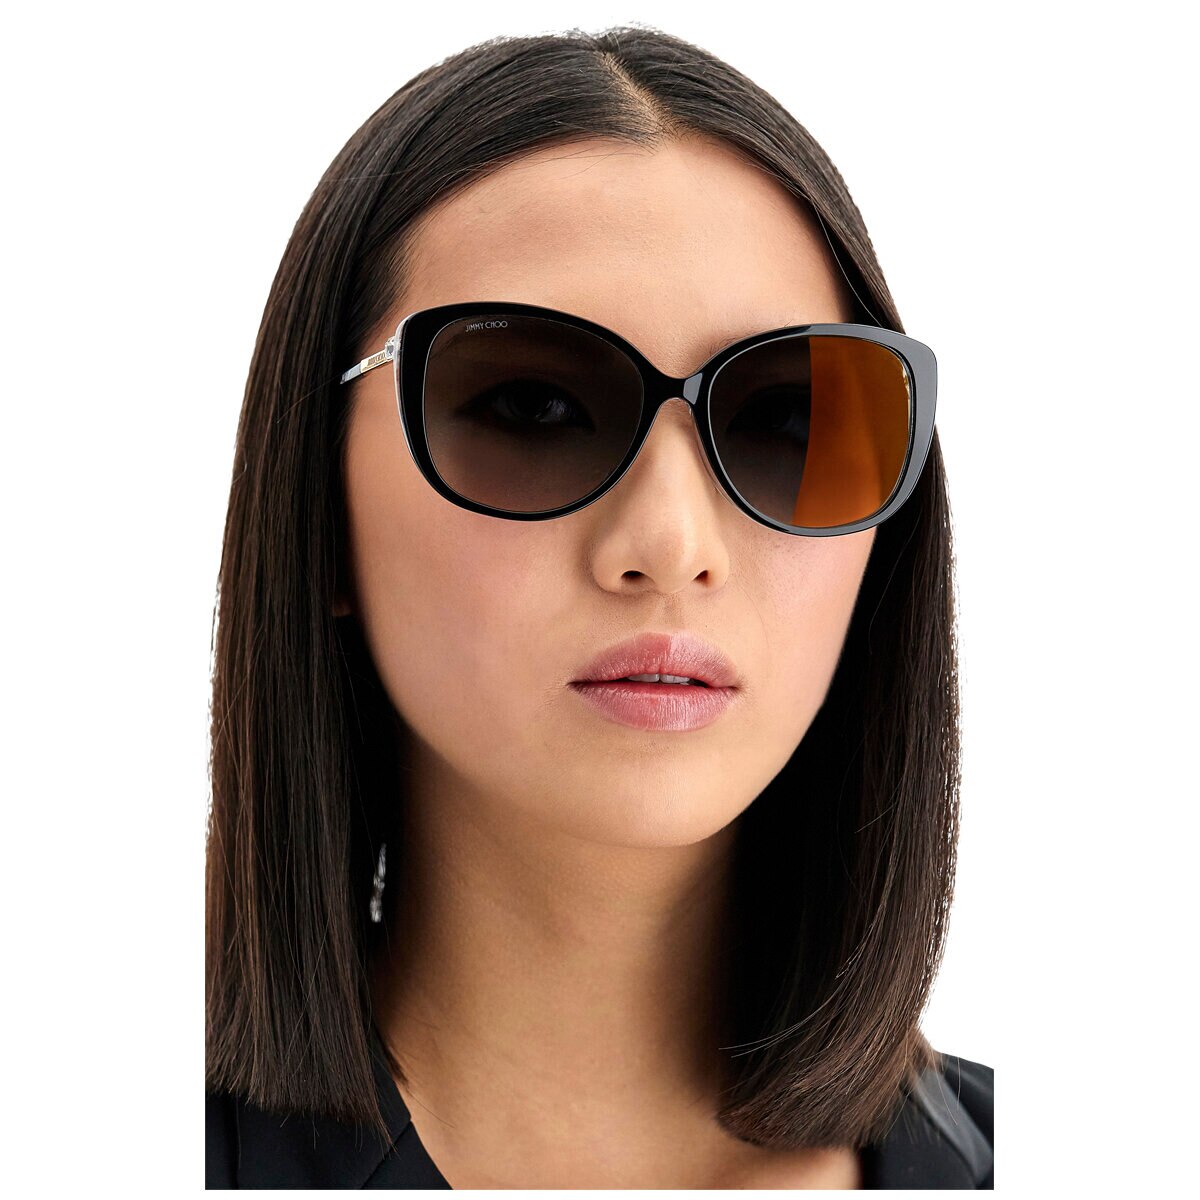 Jimmy Choo AlyFS Women’s Sunglasses